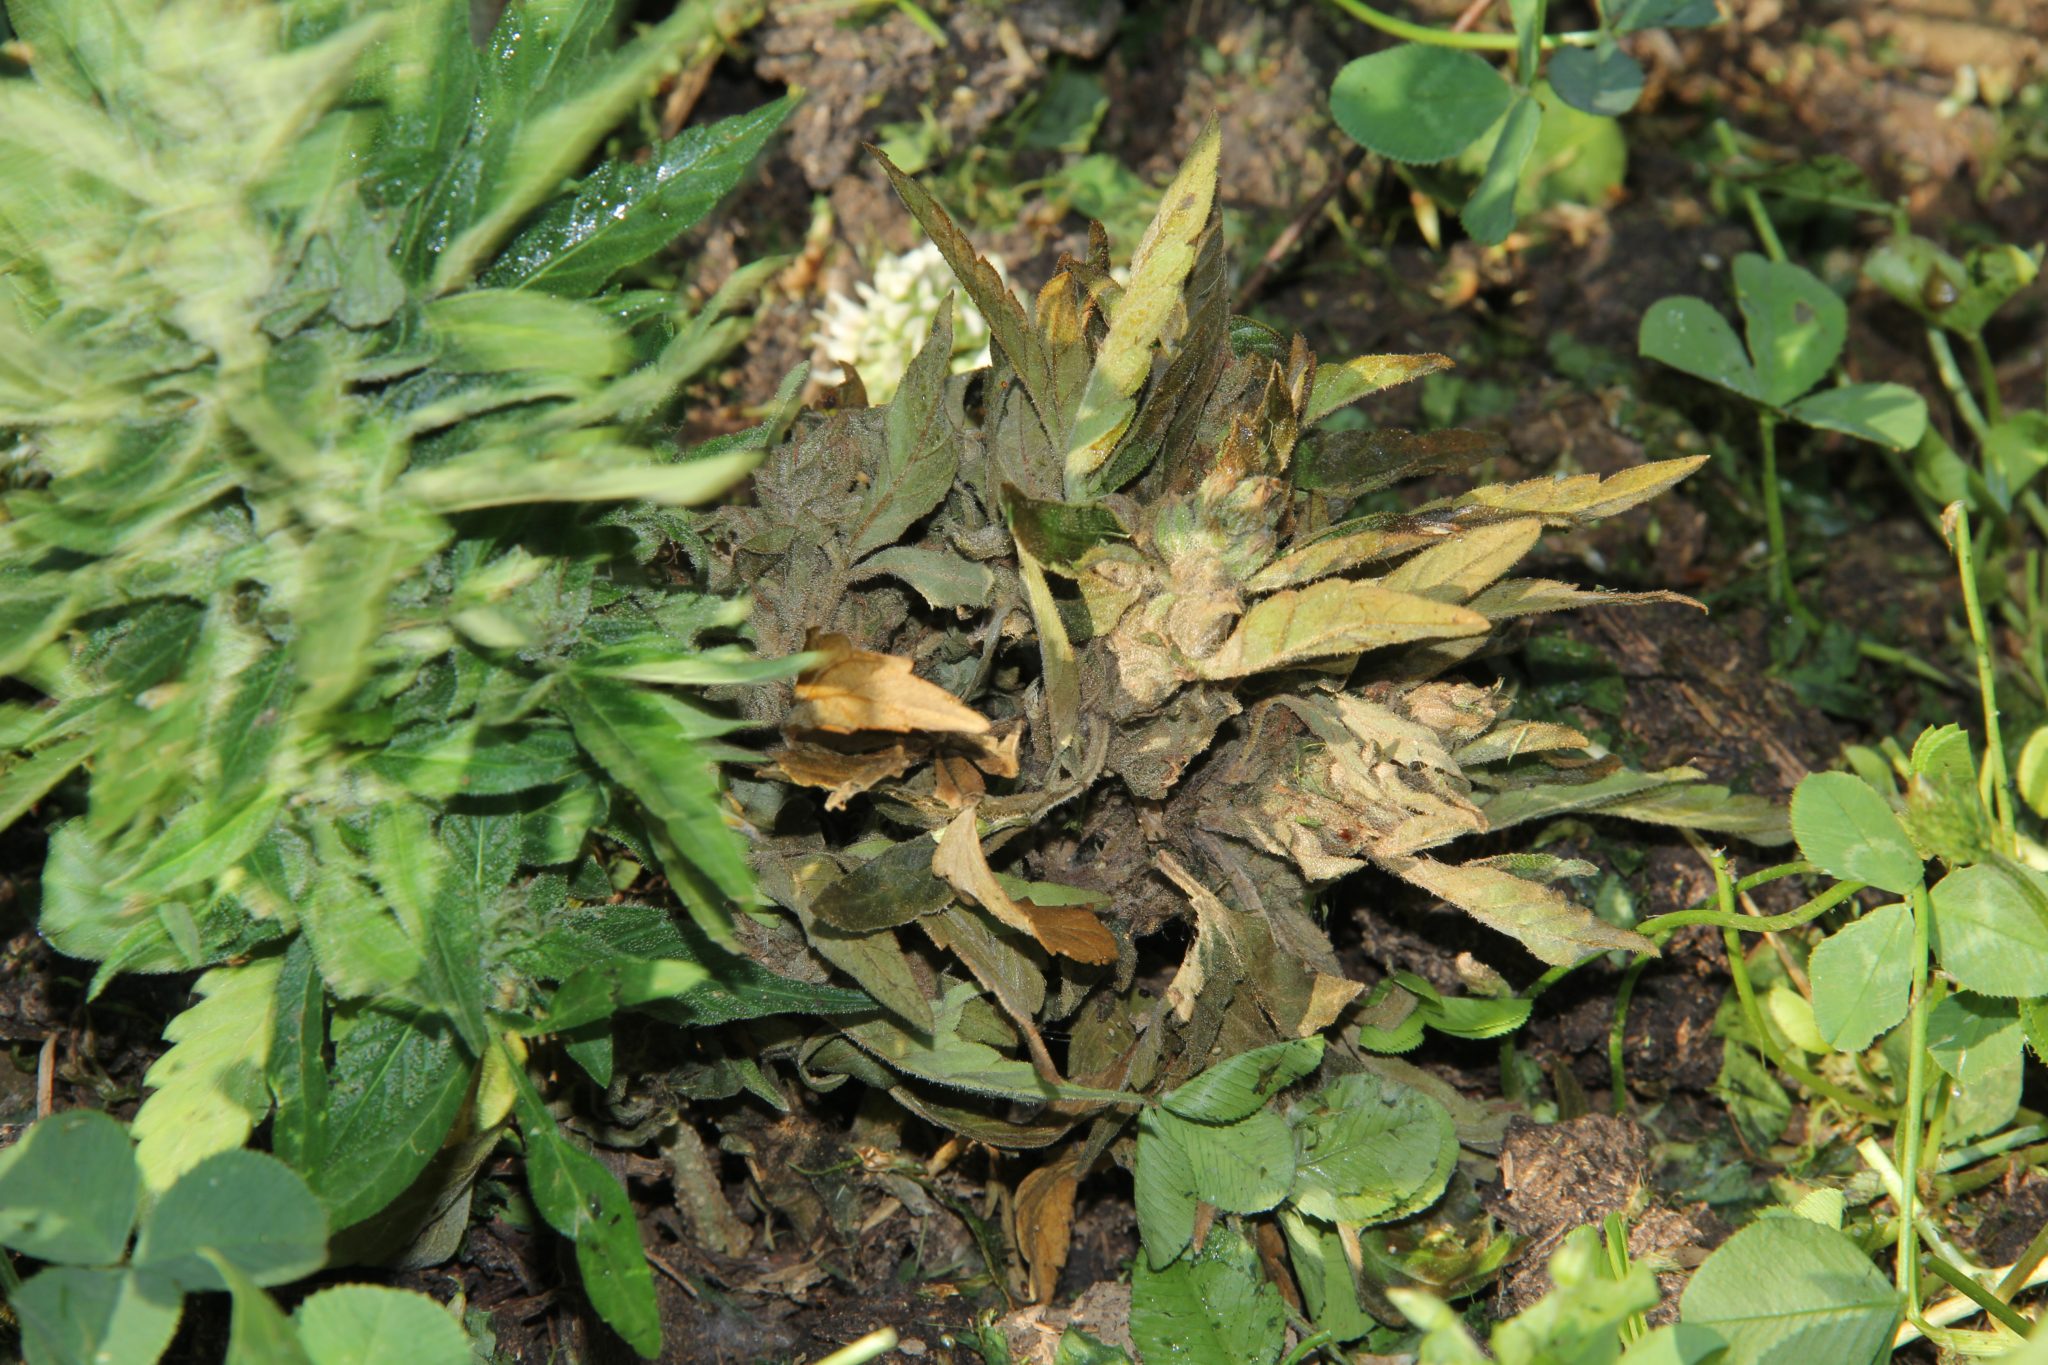 Mold growth in early flowering hemp.